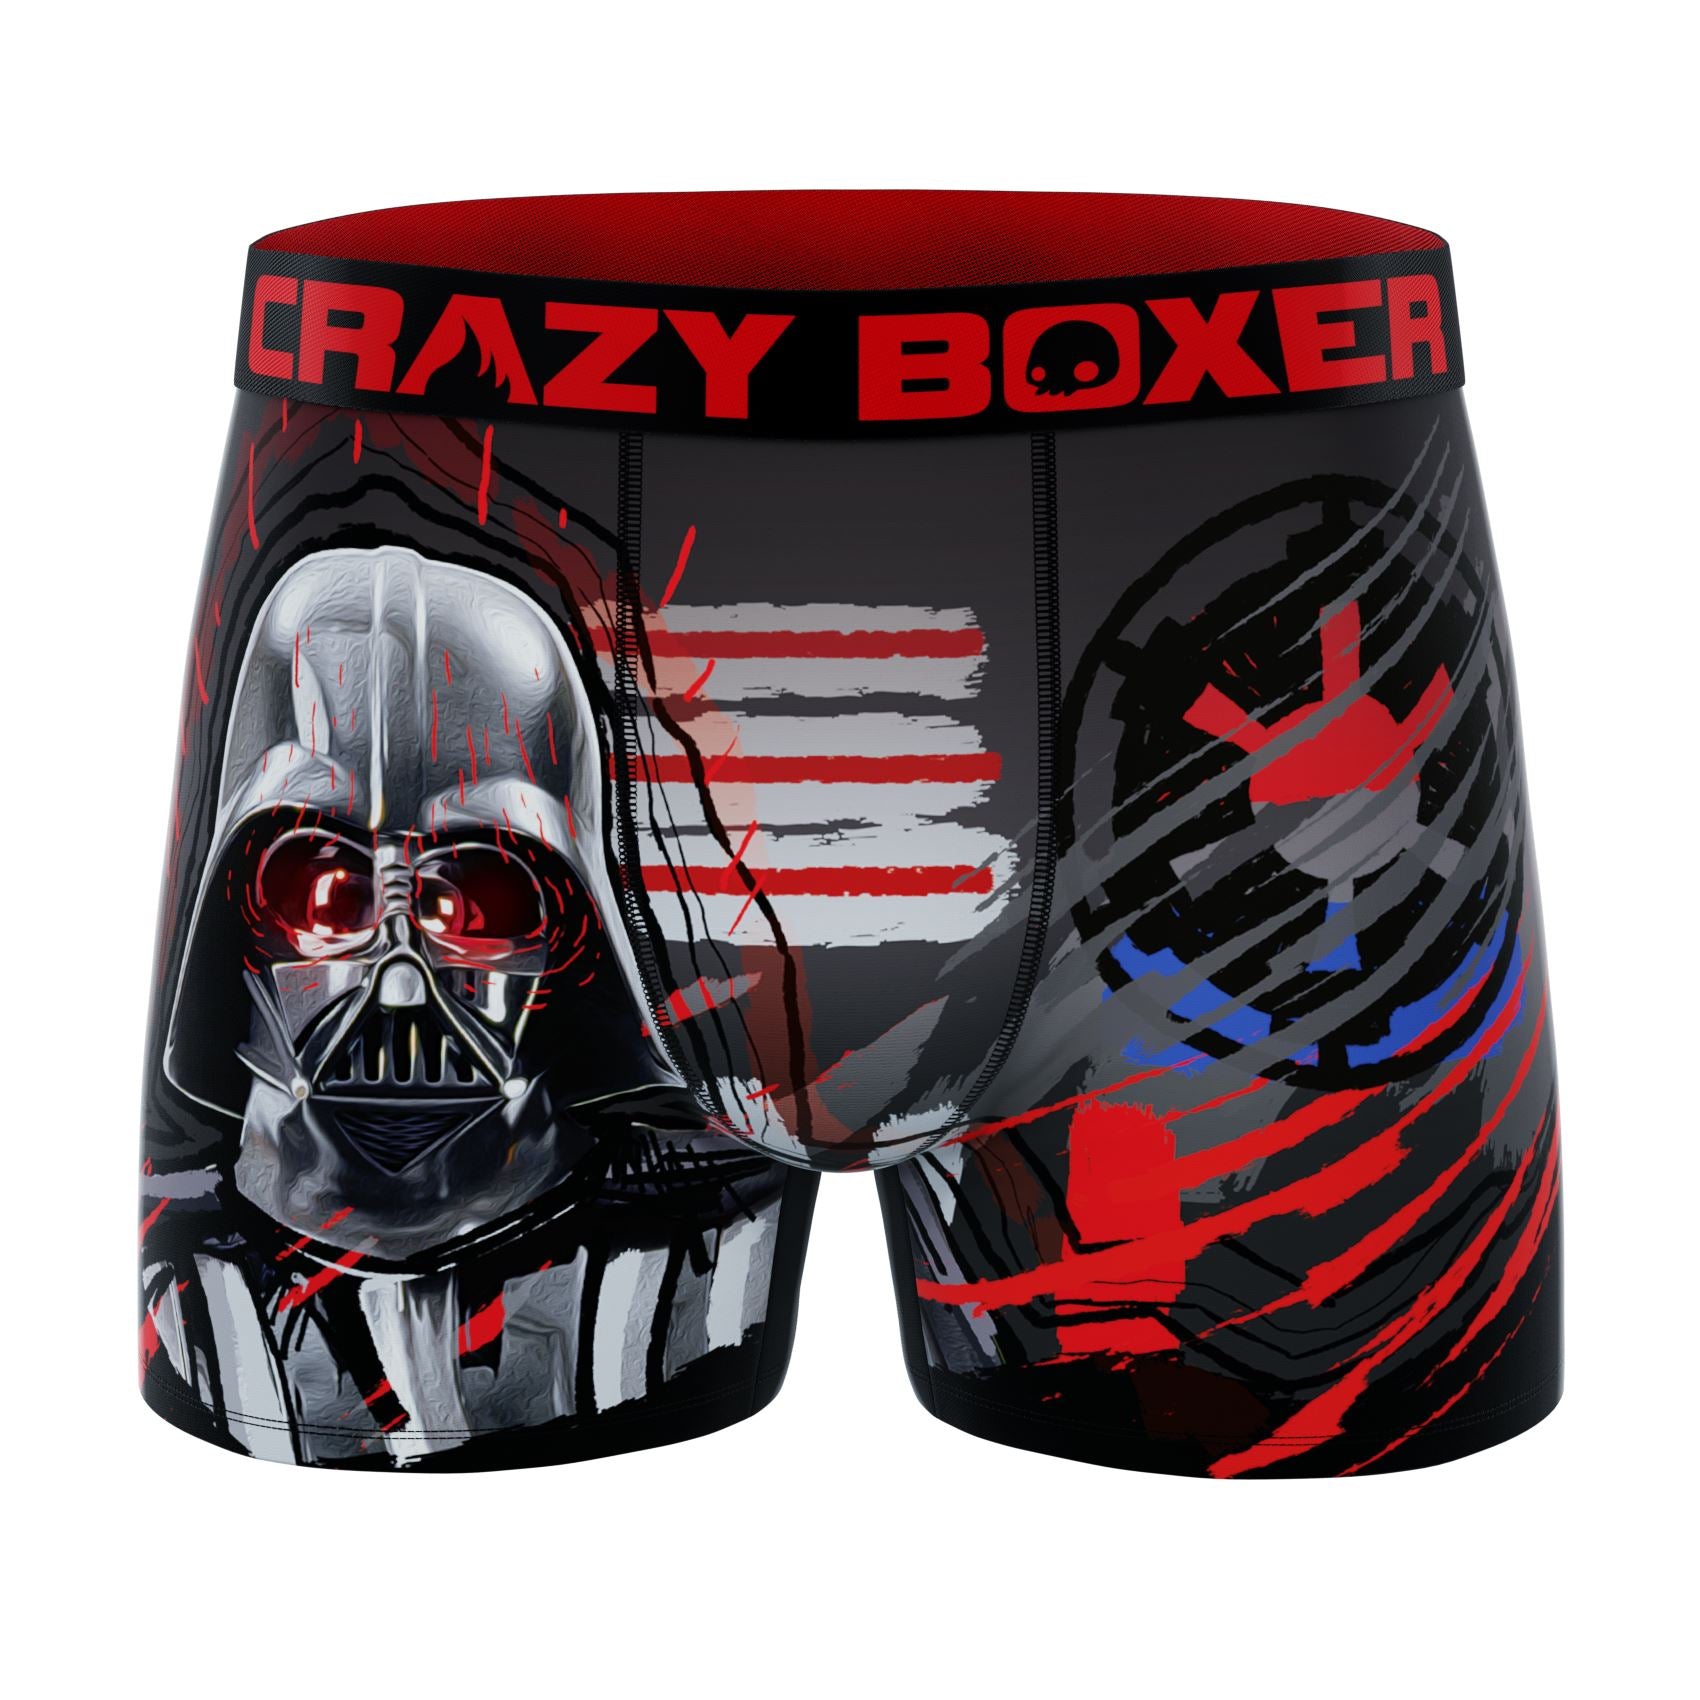 CRAZYBOXER Star Wars Darth Vader Men's Boxer Briefs